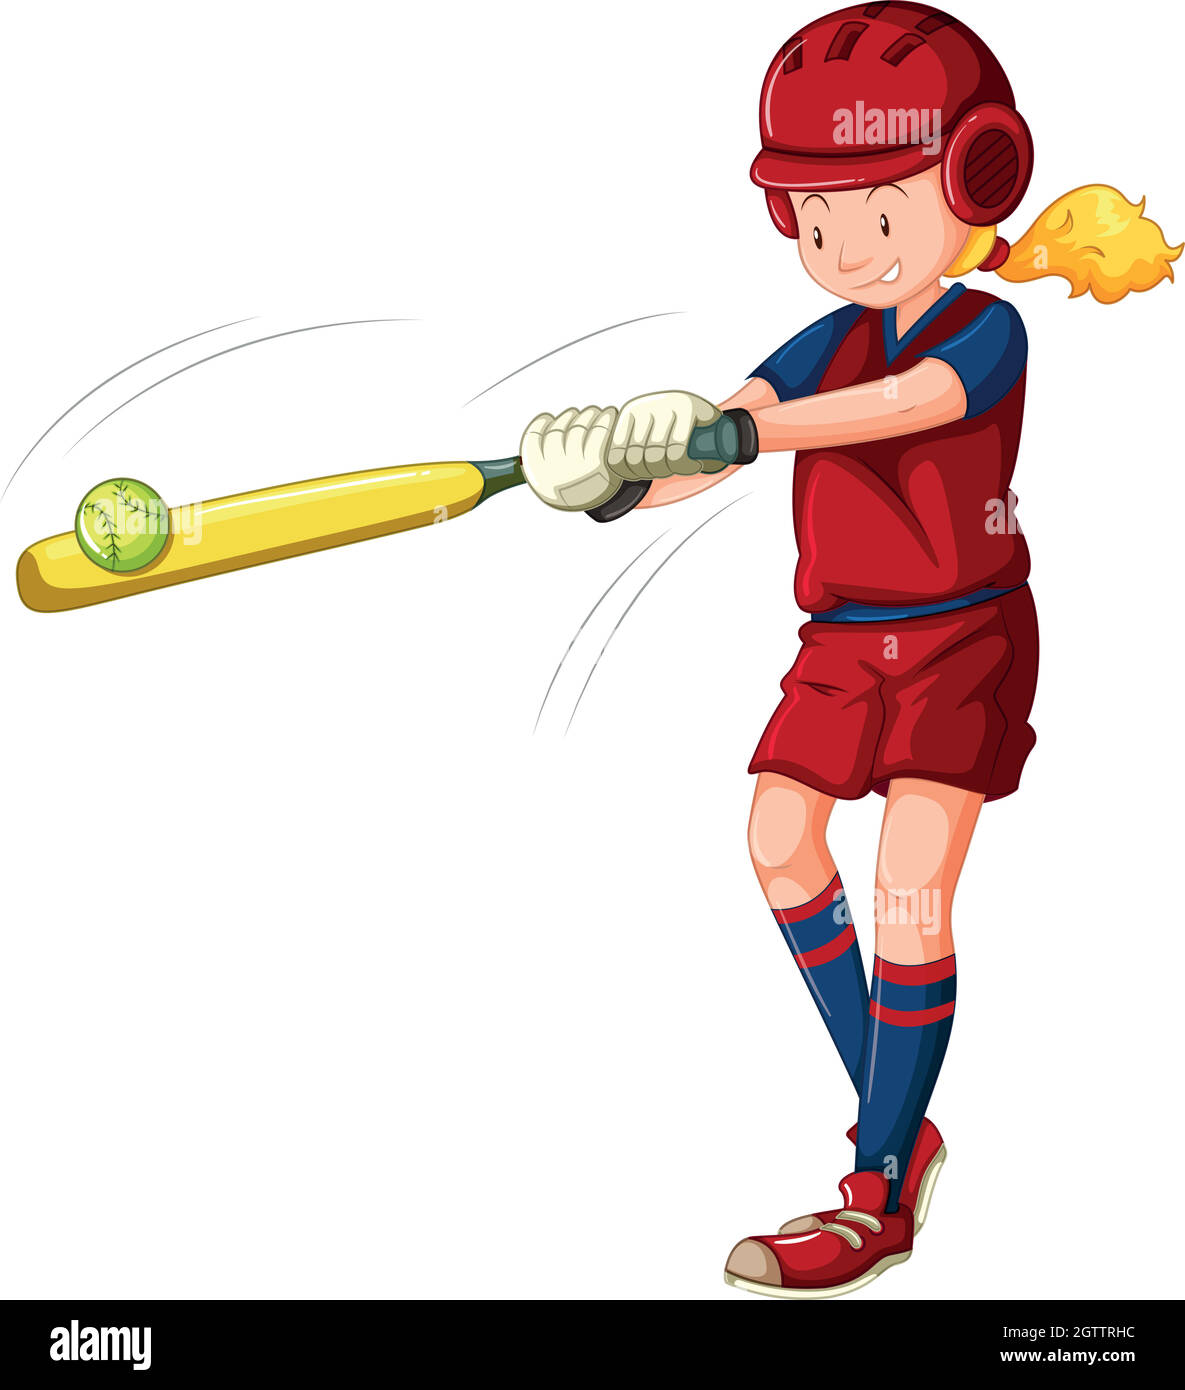 Baseball Bat Clip Art Images – Browse 34,664 Stock Photos, Vectors, and  Video